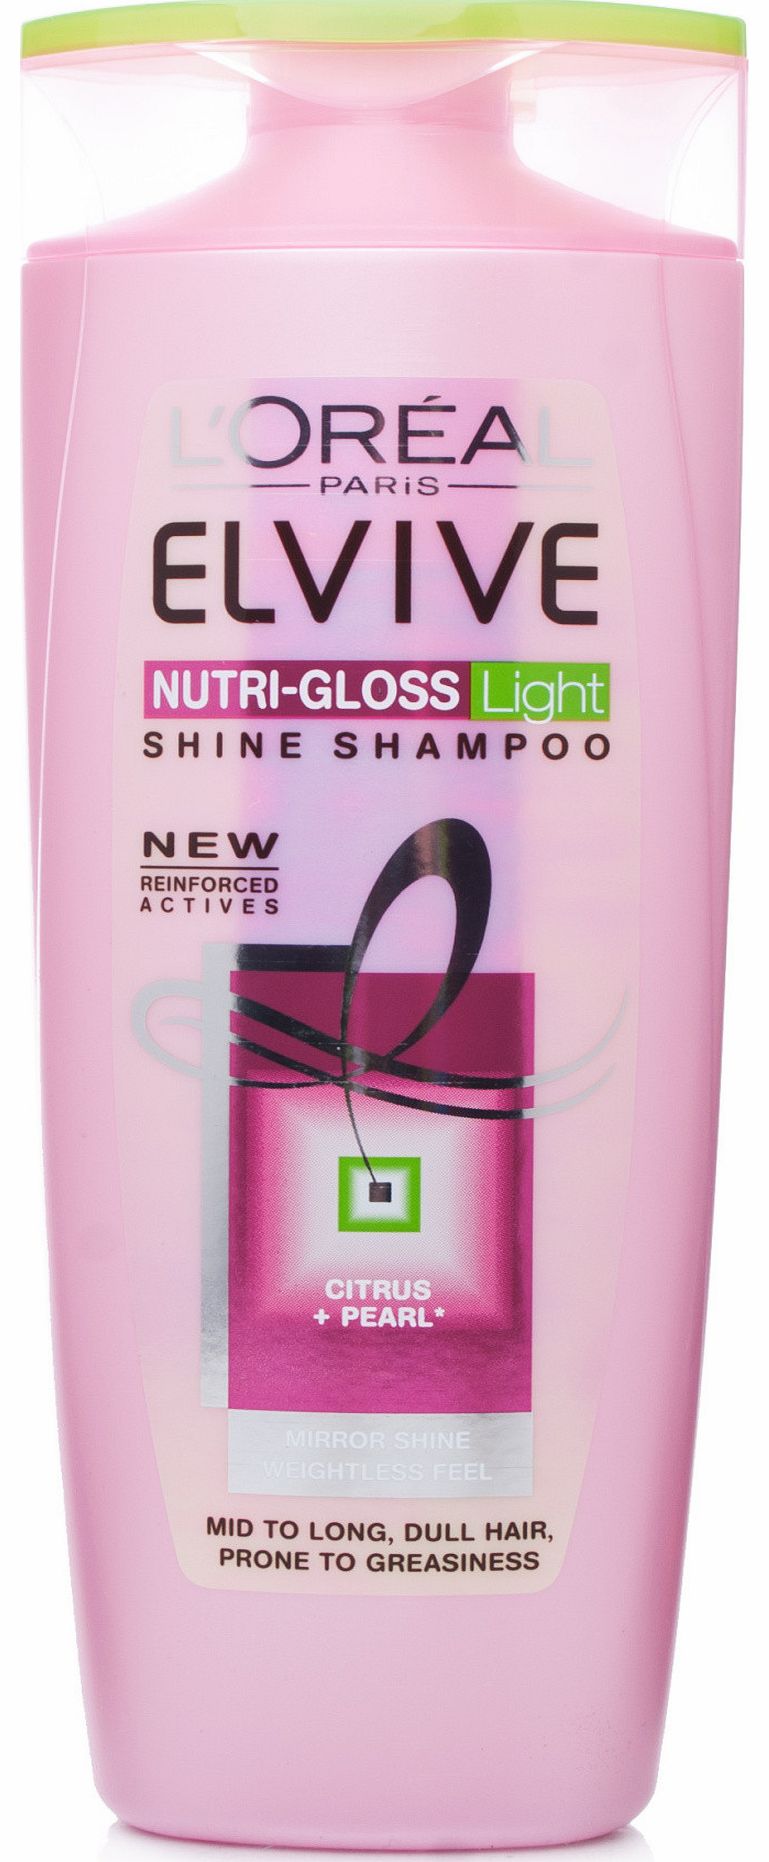 L'Oreal Elvive Nutri-Gloss Light Shampoo